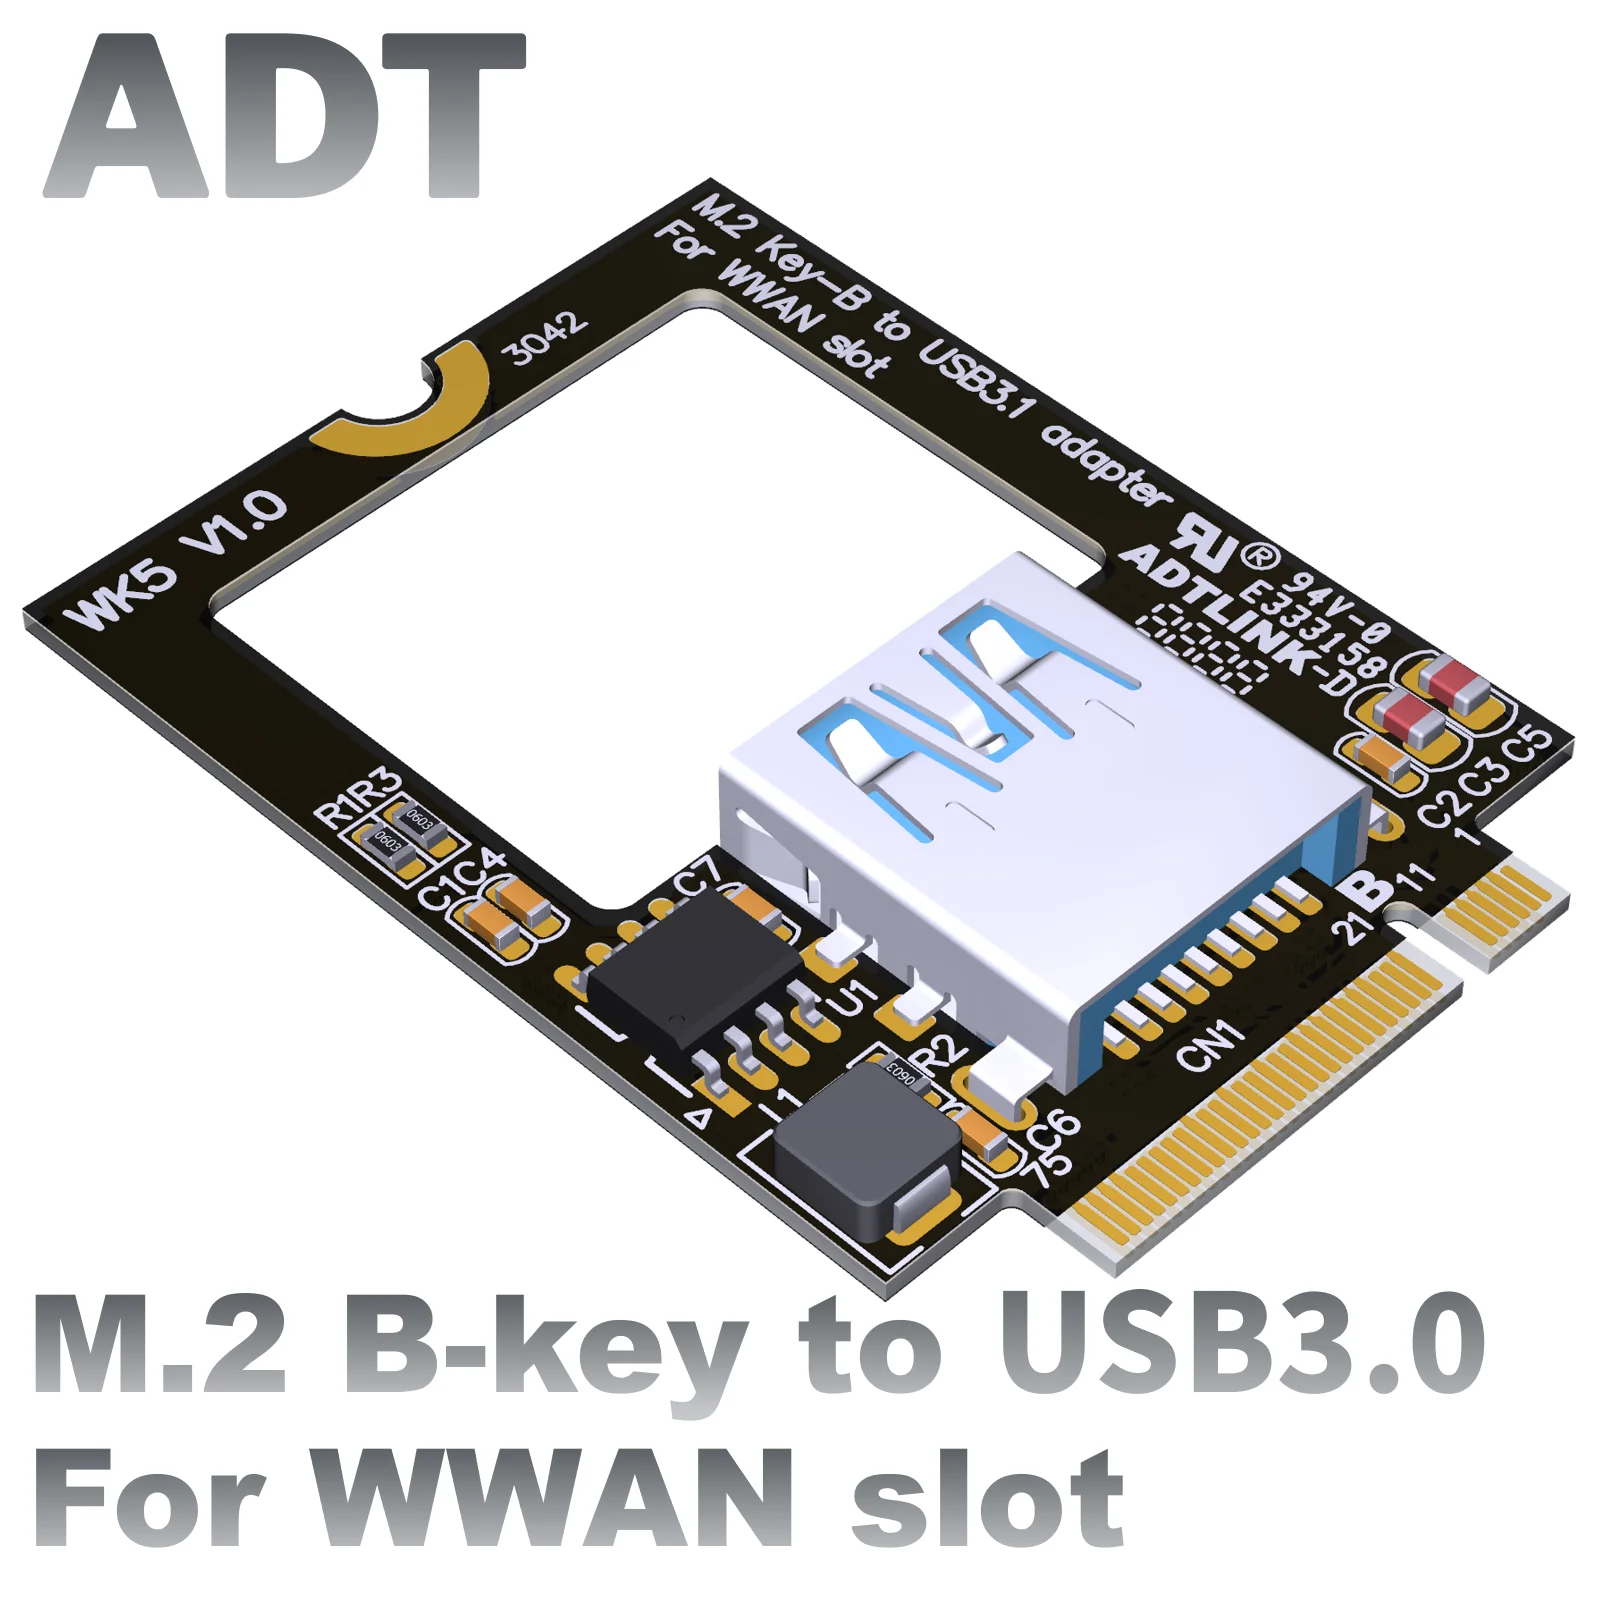 ADT M.2 B-key switching wireless Bluetooth wifi NIC USB 3.0 solid State Drive NGFF3042